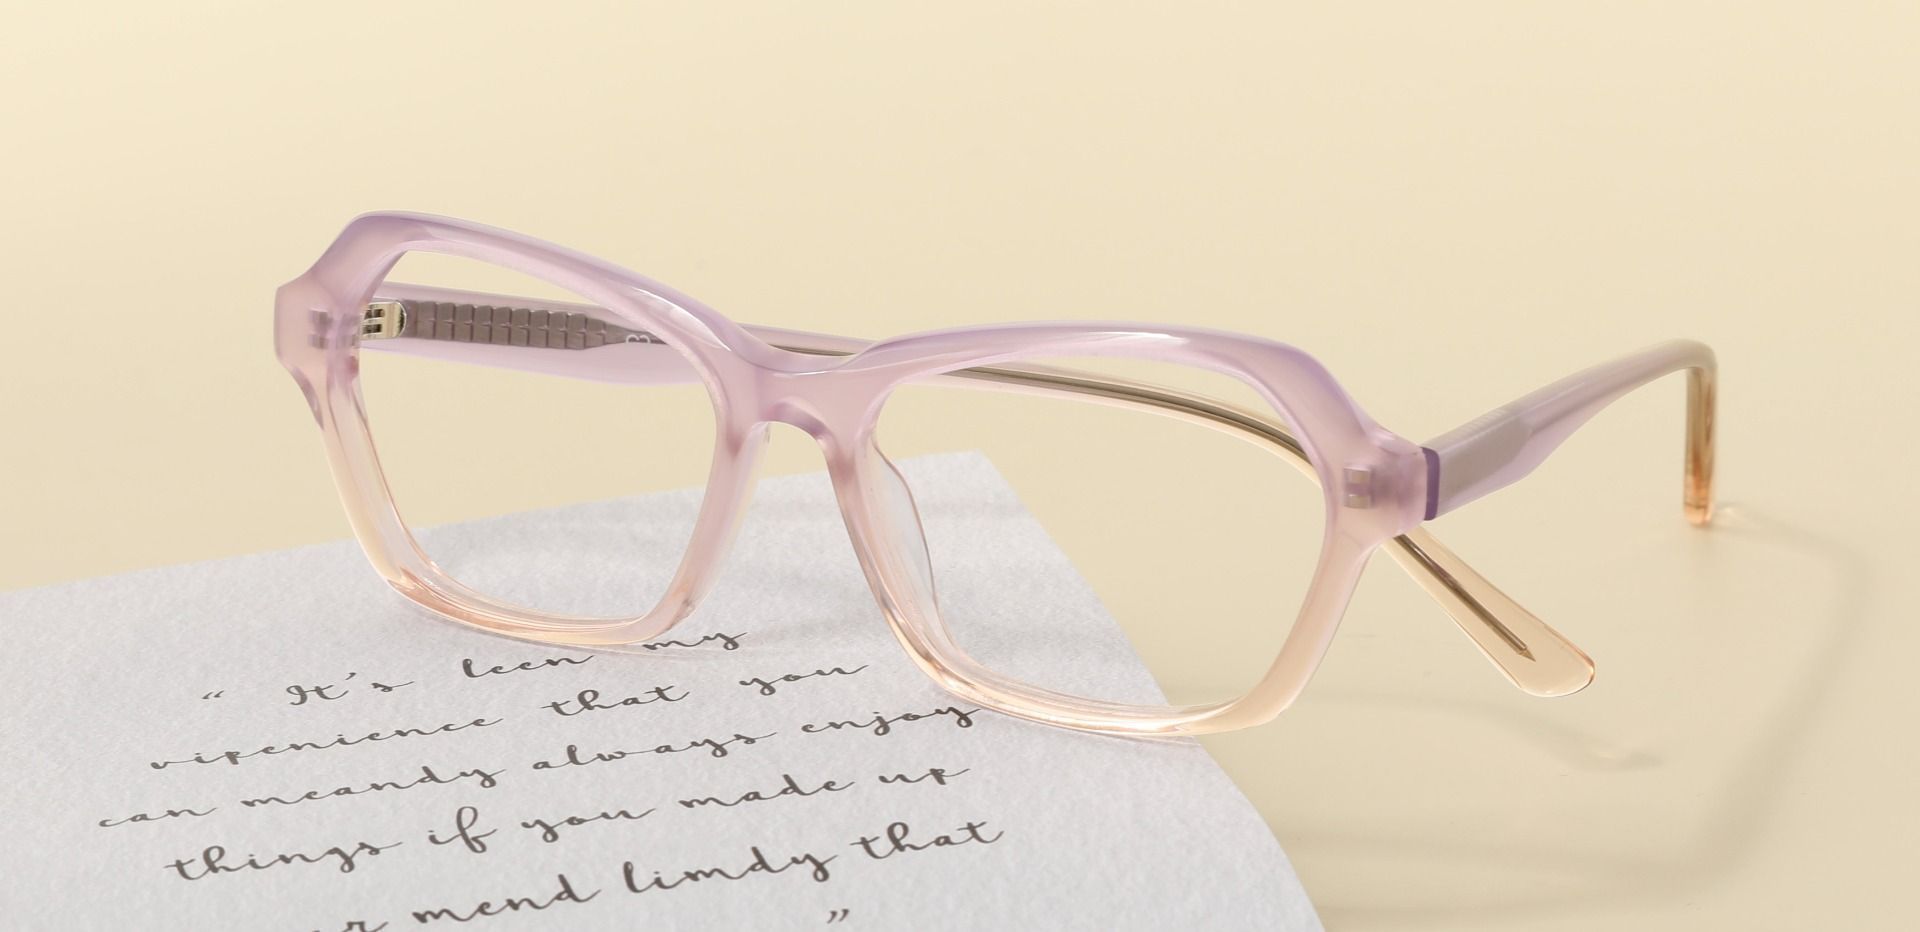 Keota Cat Eye Eyeglasses Frame - Purple